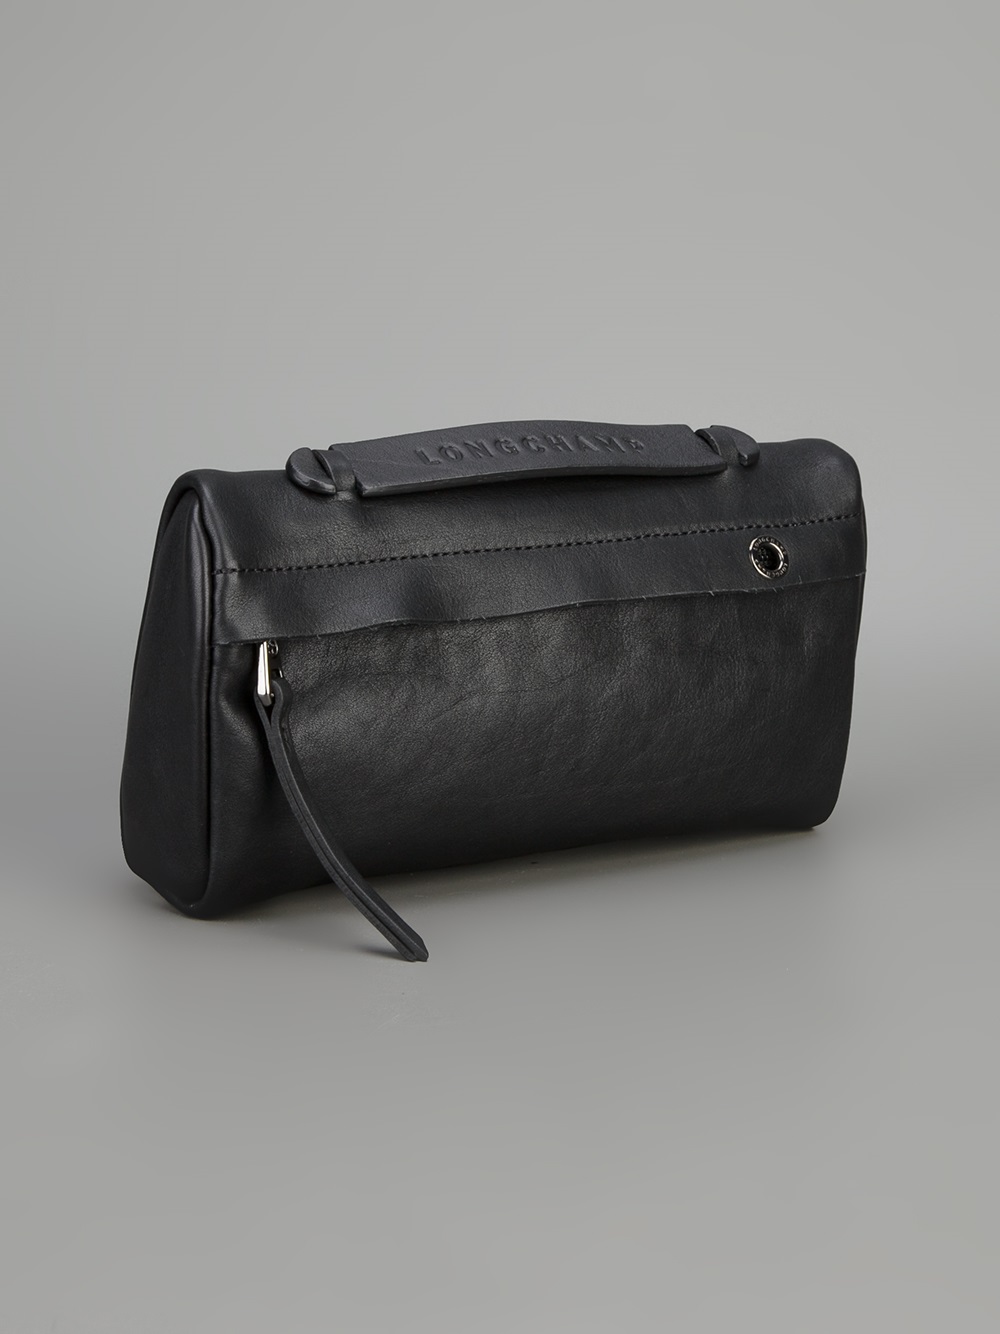 Longchamp 3d Clutch Bag in Black - Lyst